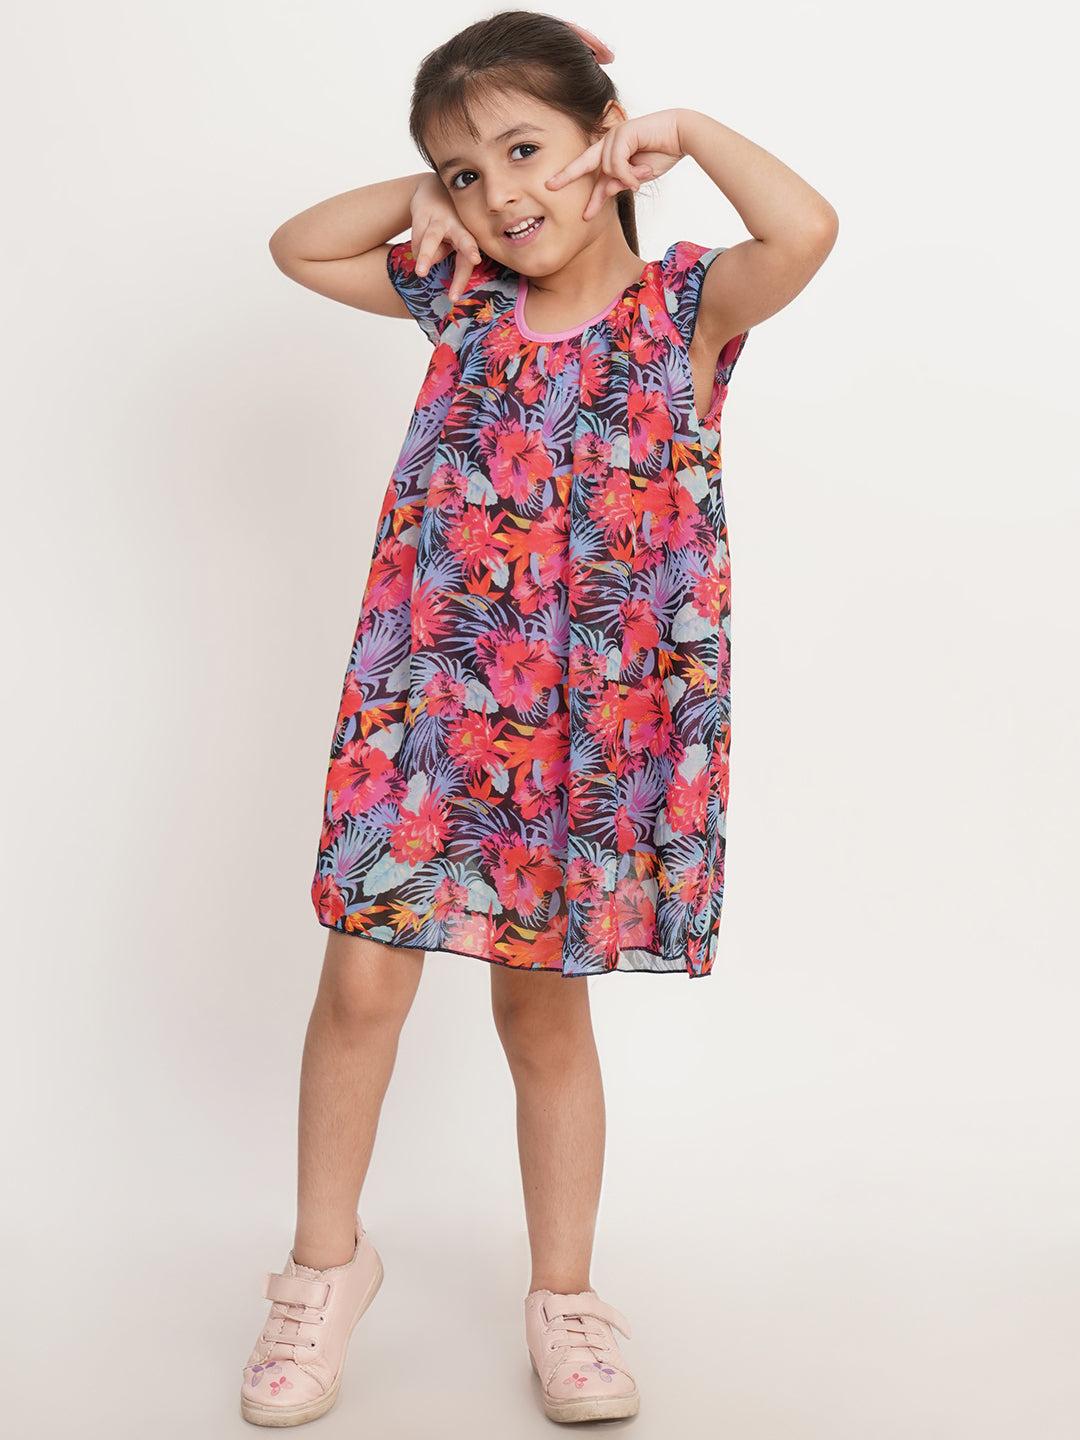 CREATIVE KID'S Girl Pink & Black Floral Print A-Line Dress